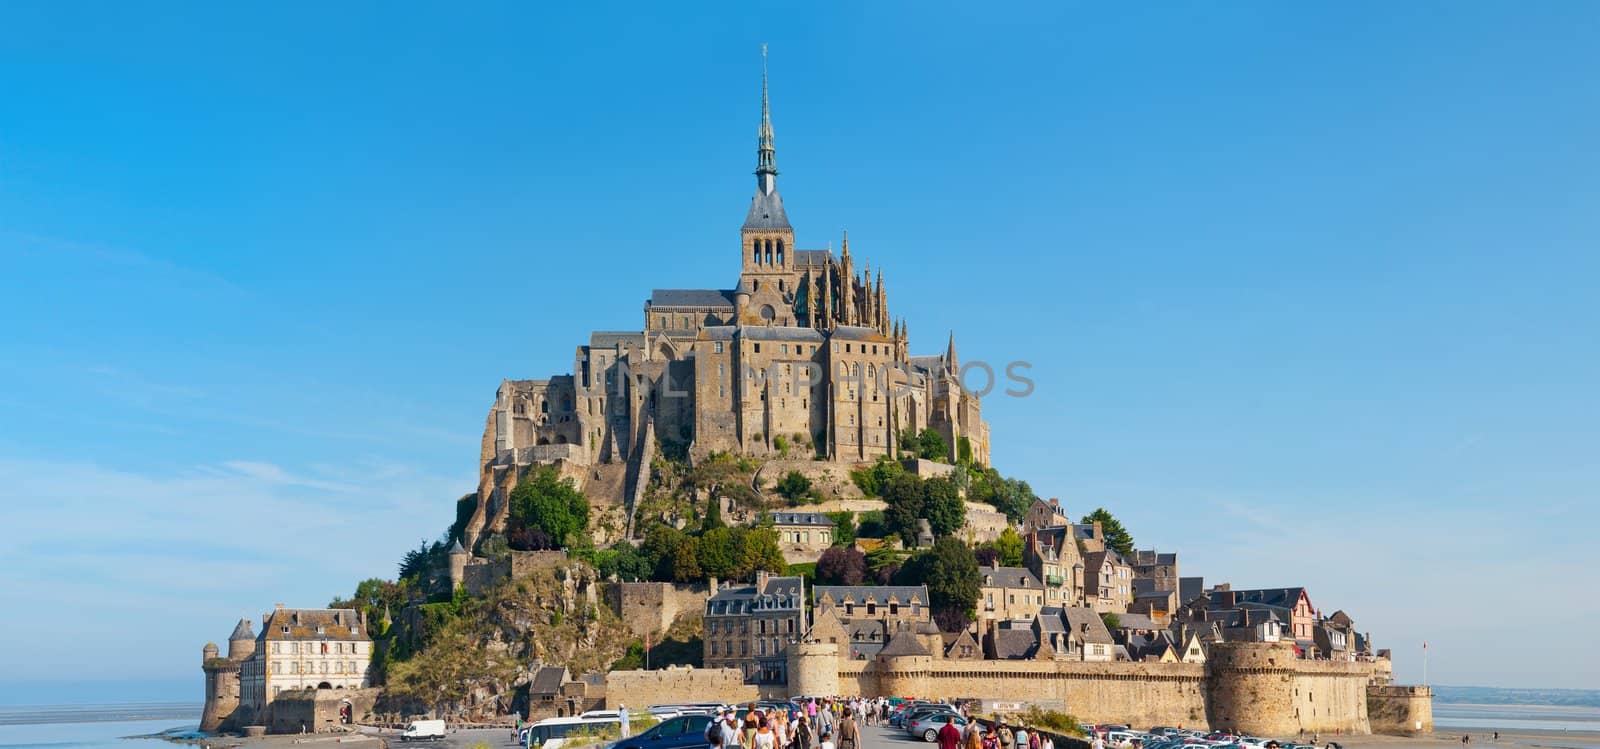 Panorama le Mont Saint-Michel by maxoliki